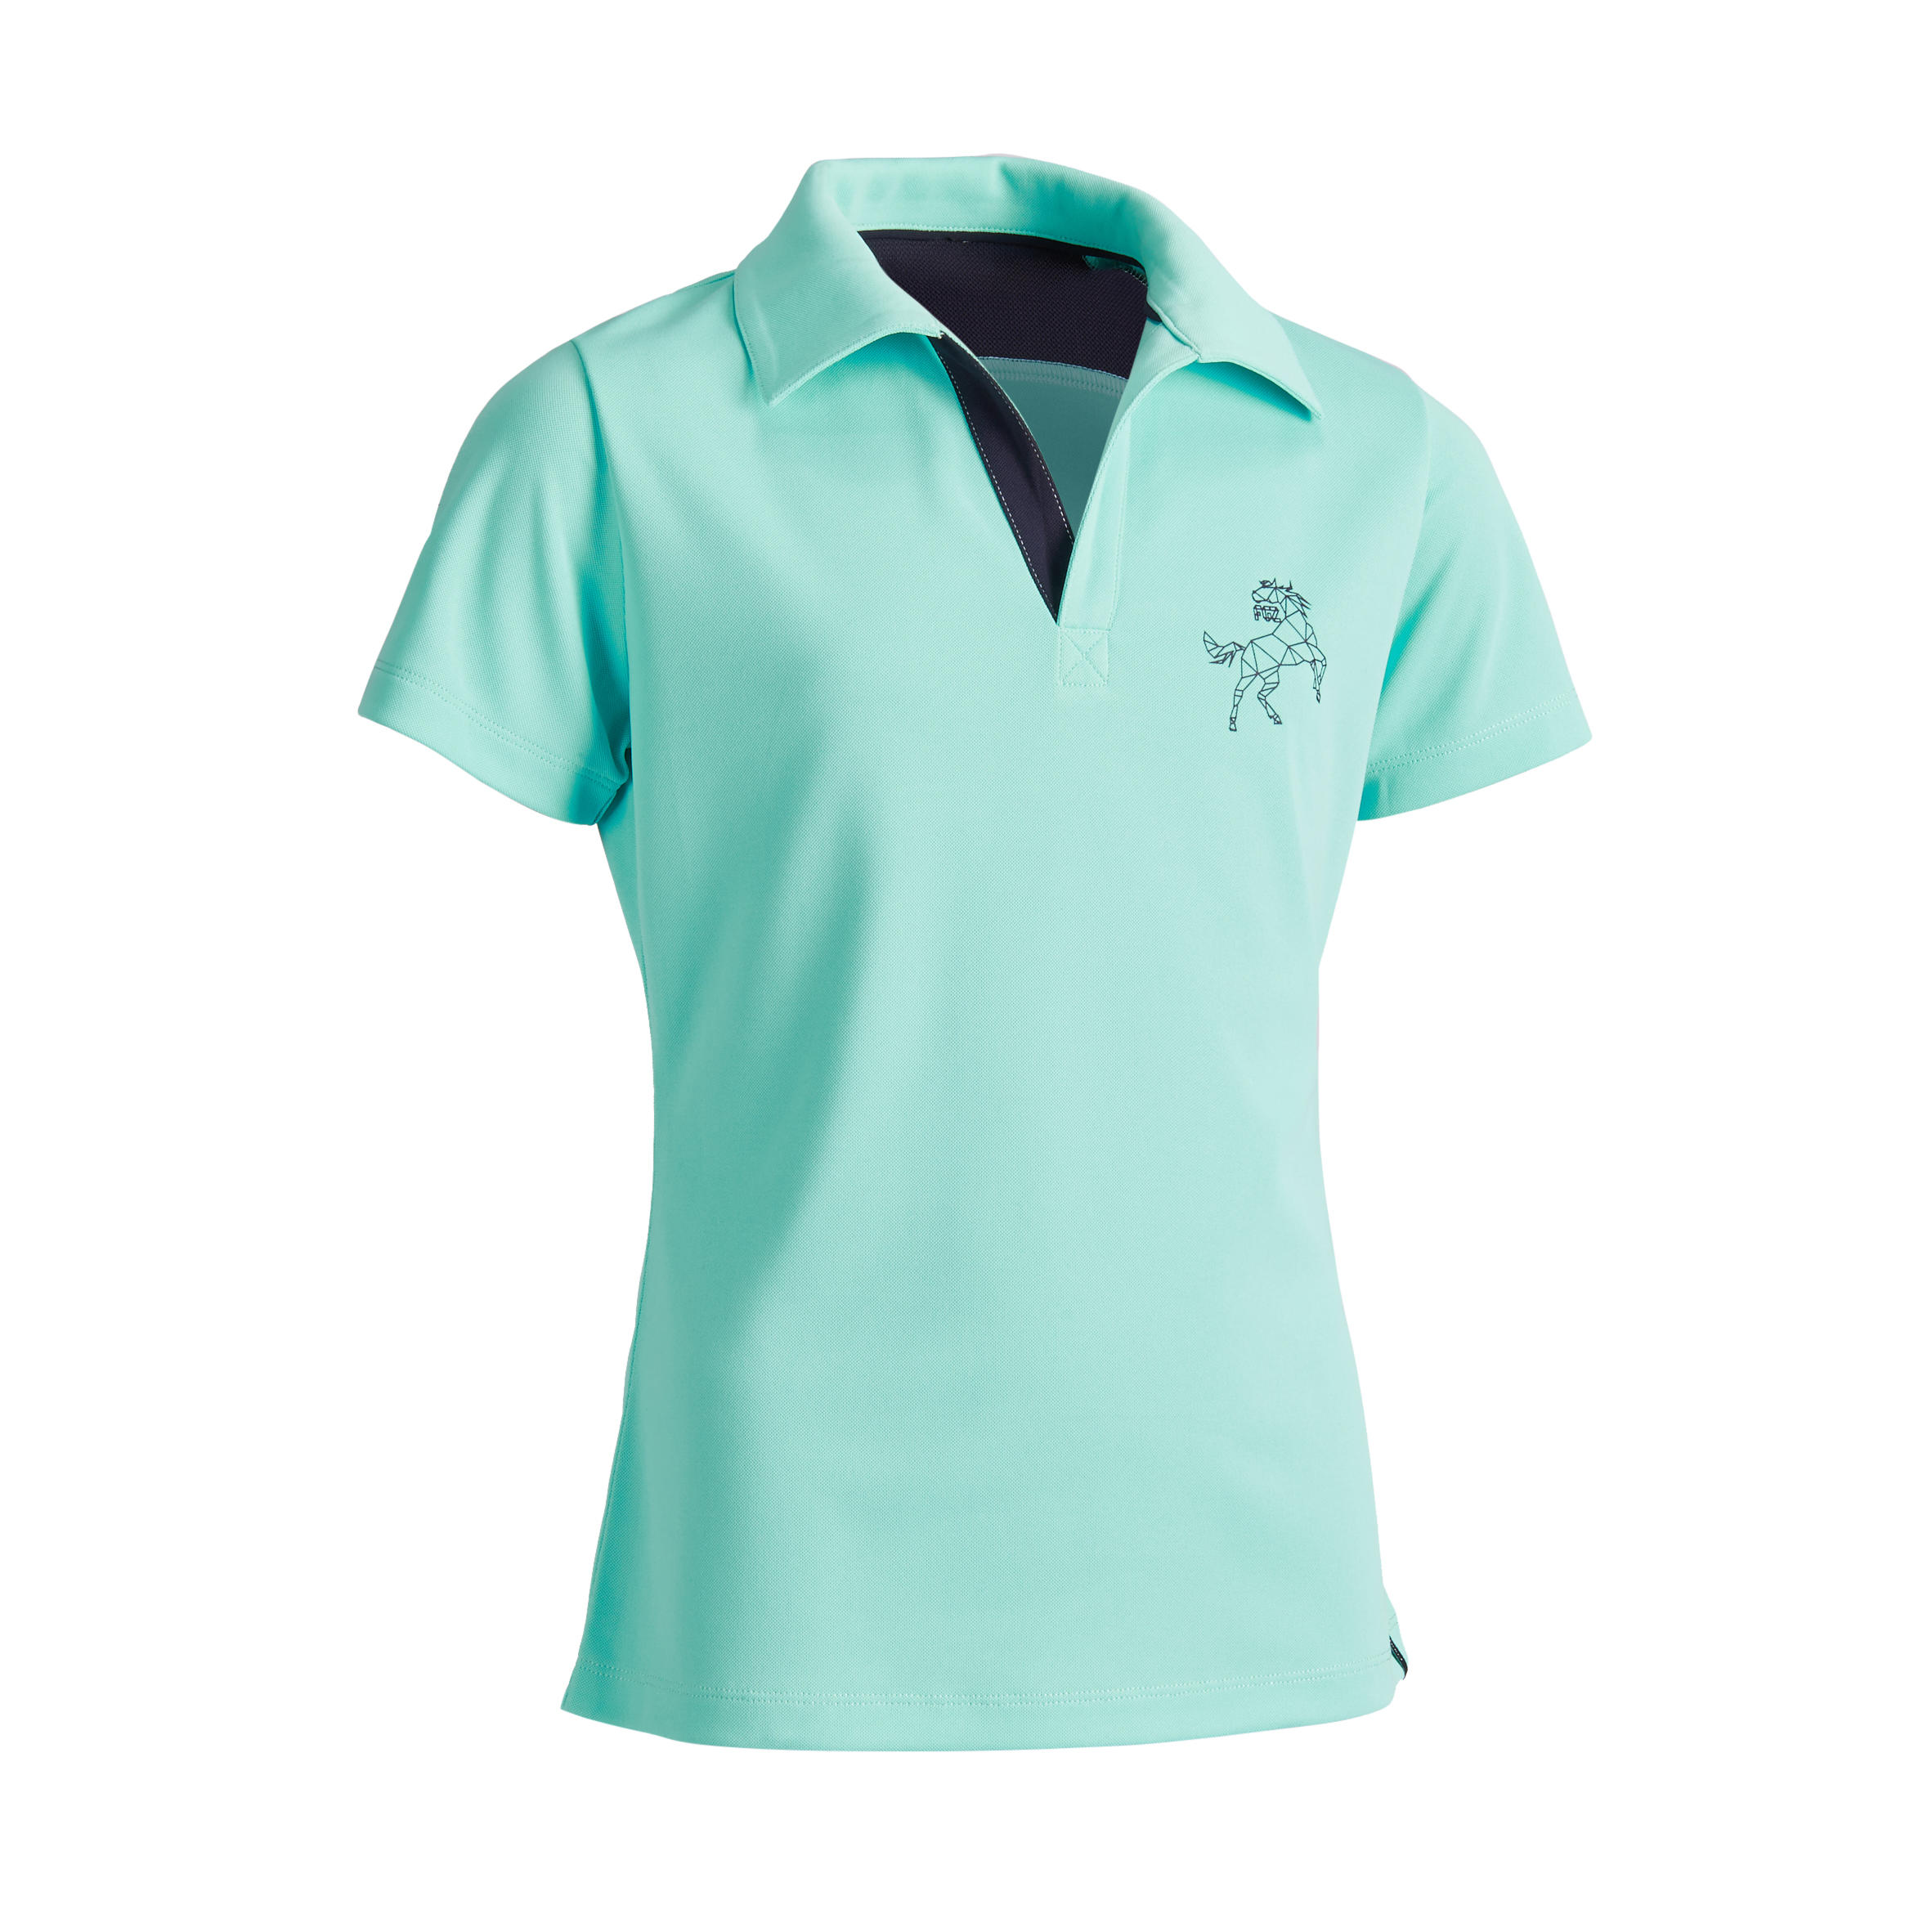 Requisite Damen Logo Reitshirt Polo Shirt Polohemd Kurzarm Bequem Sitzend 